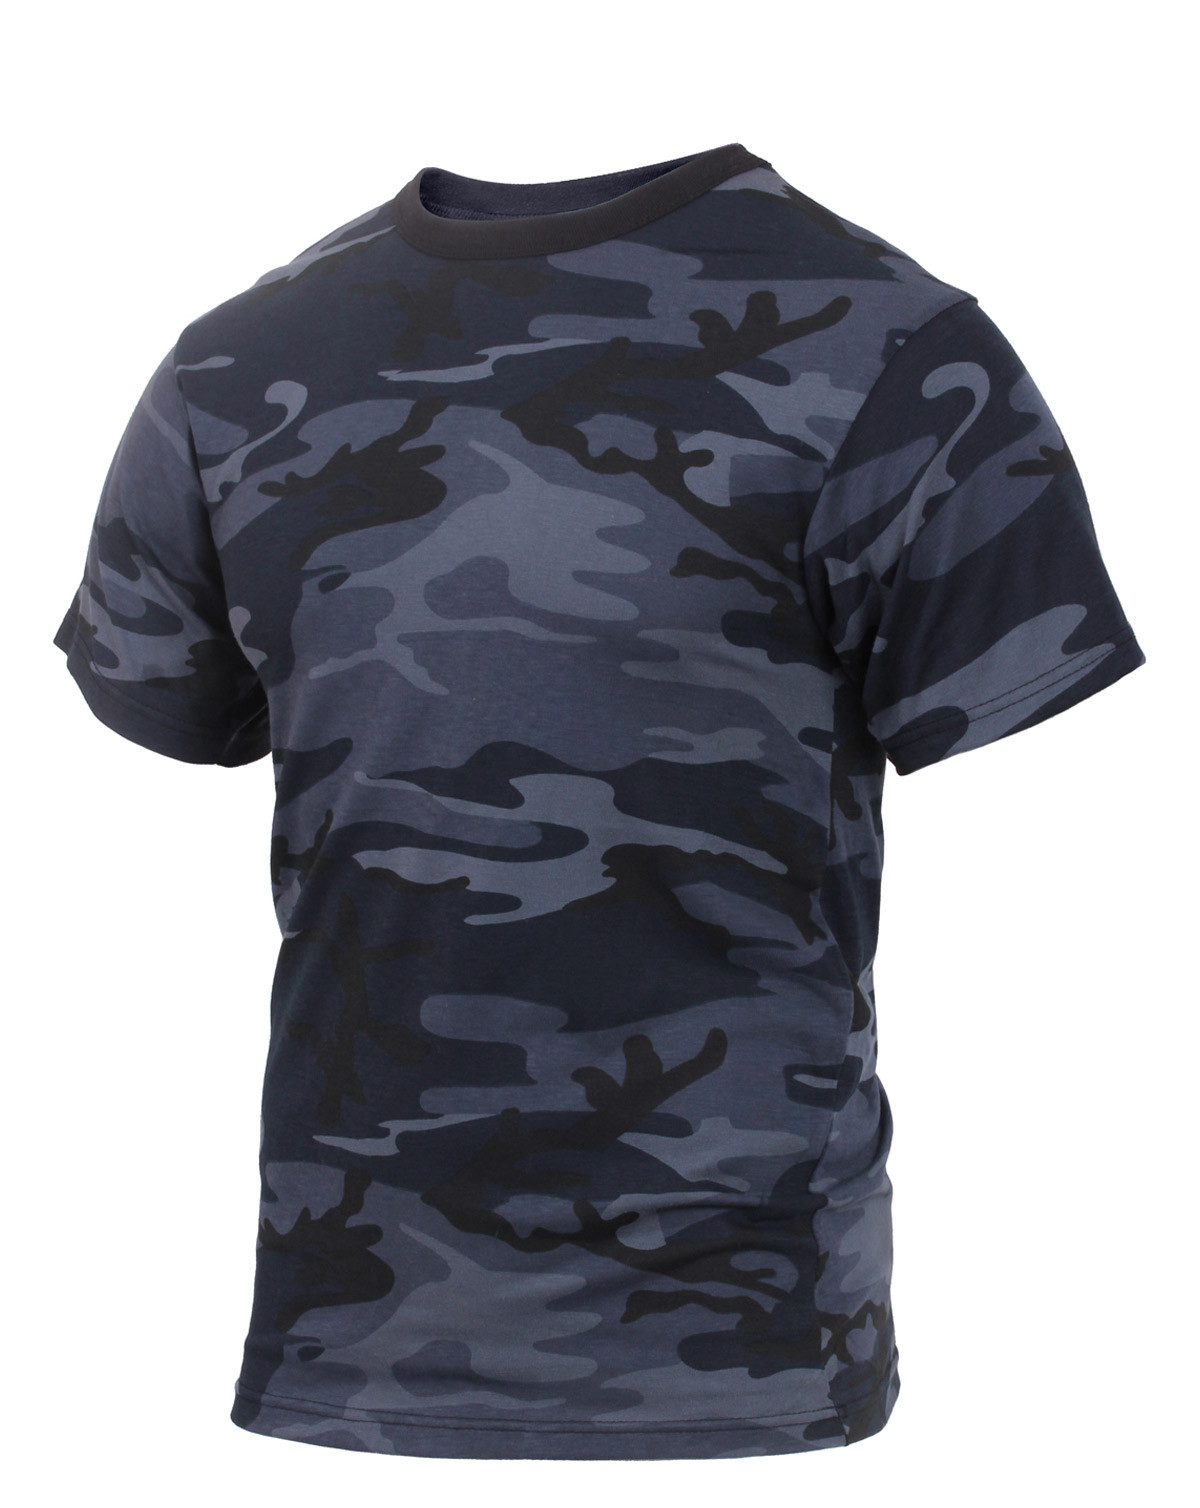 Rothco T-shirt - Mange Camouflager (Blå Midnat Camo, S)